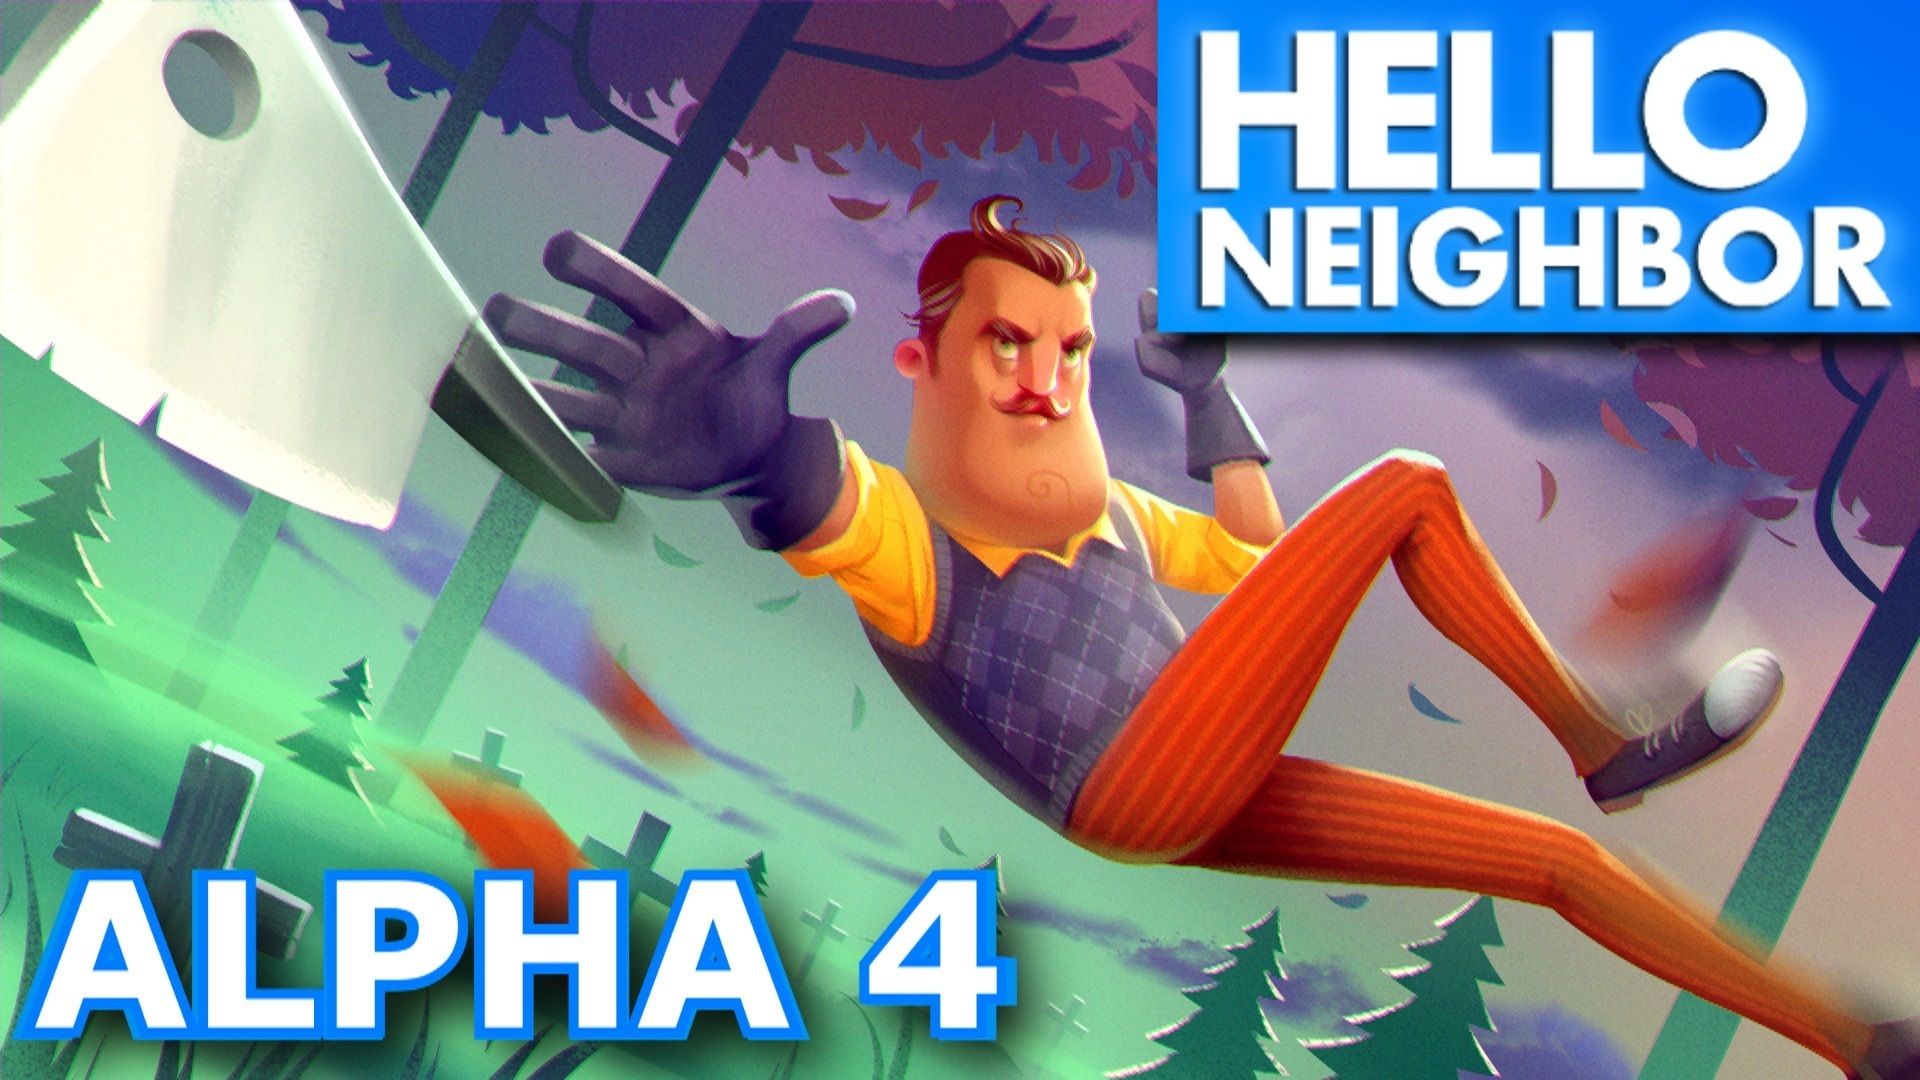 hello neighbor alpha 4 game play now